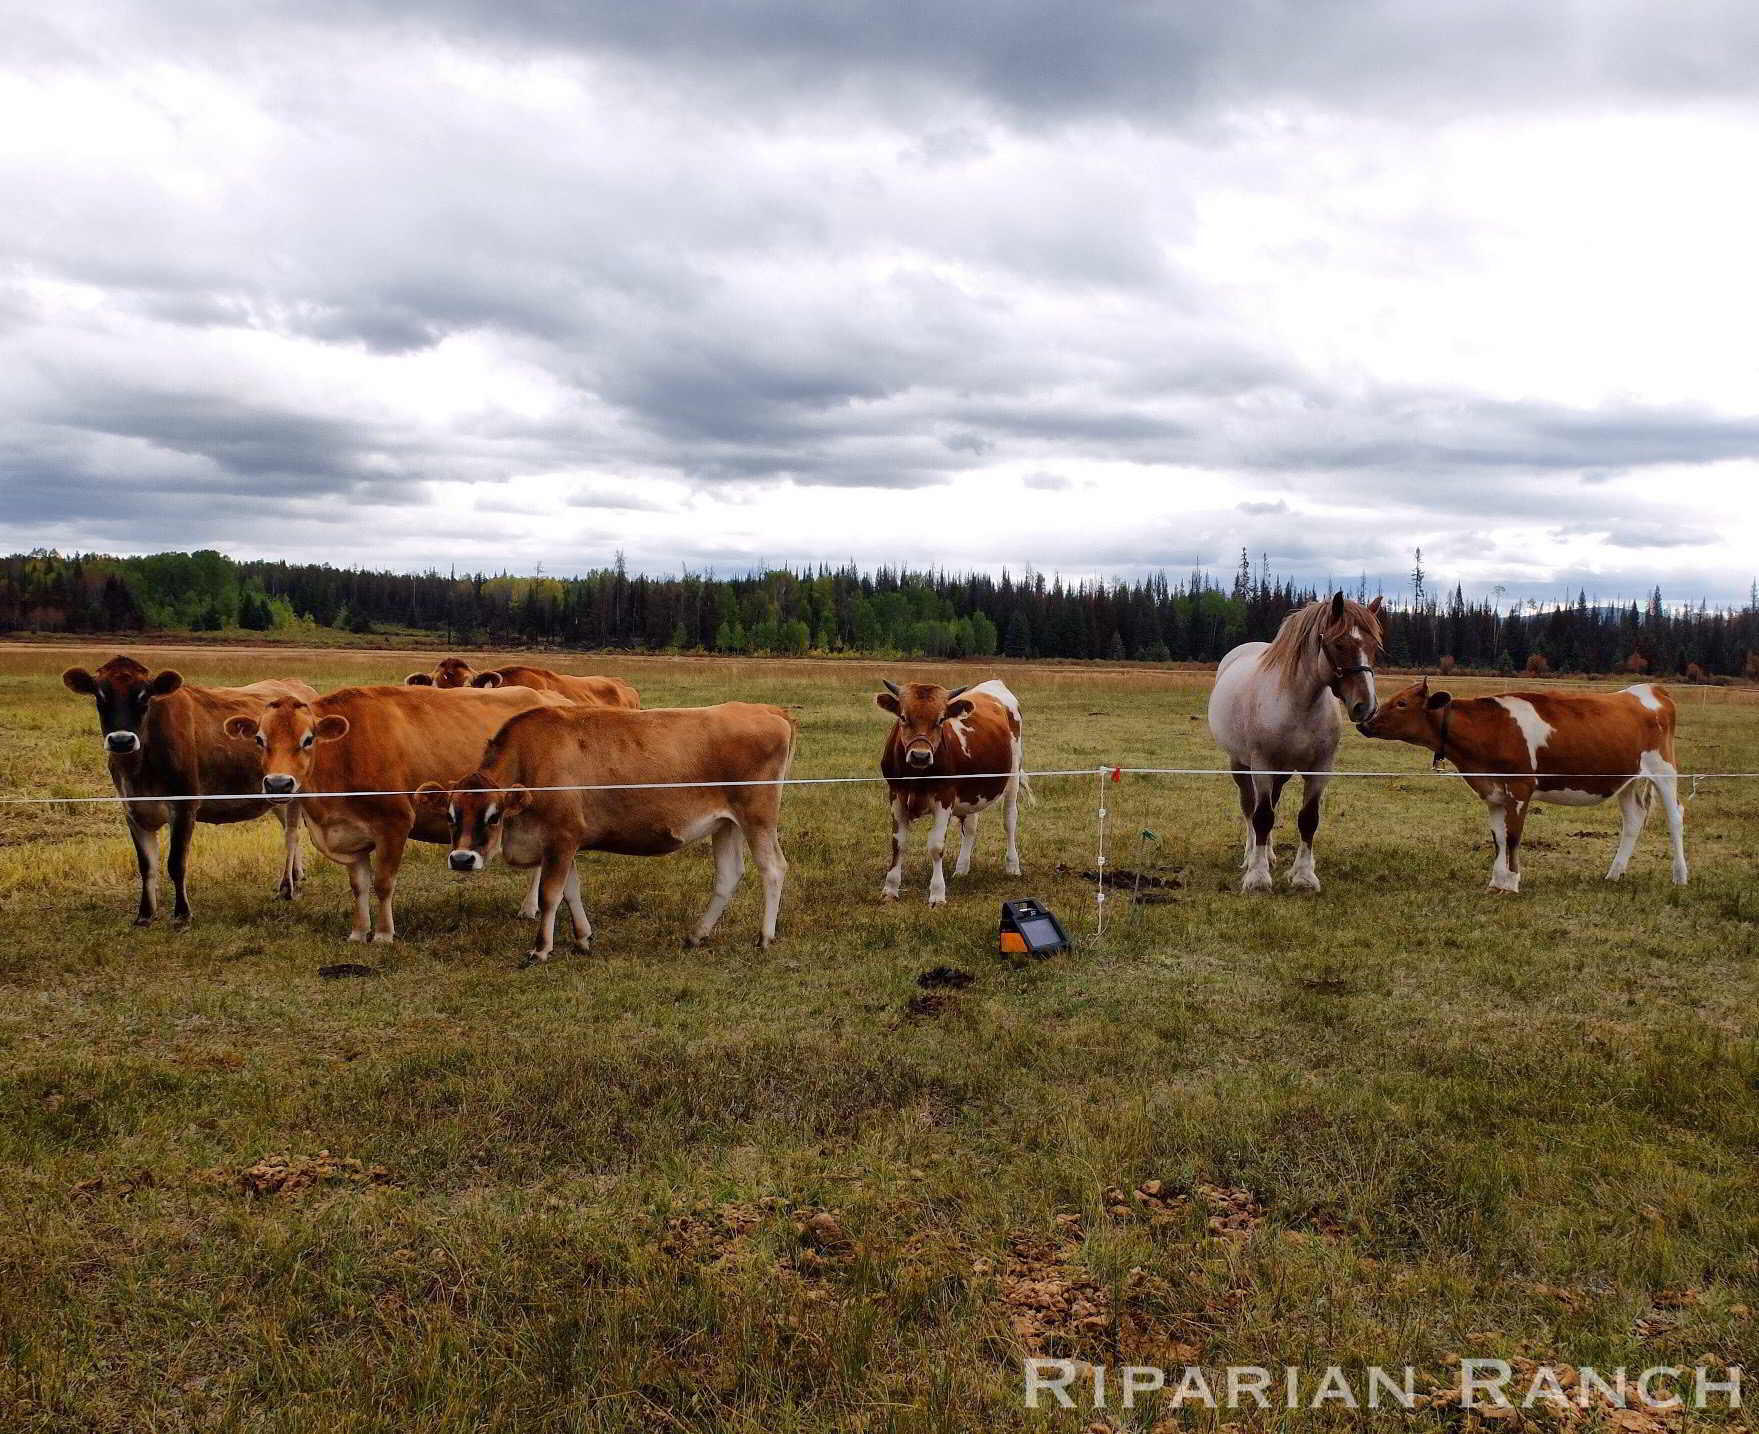 Cows in field at Riparian Ranch